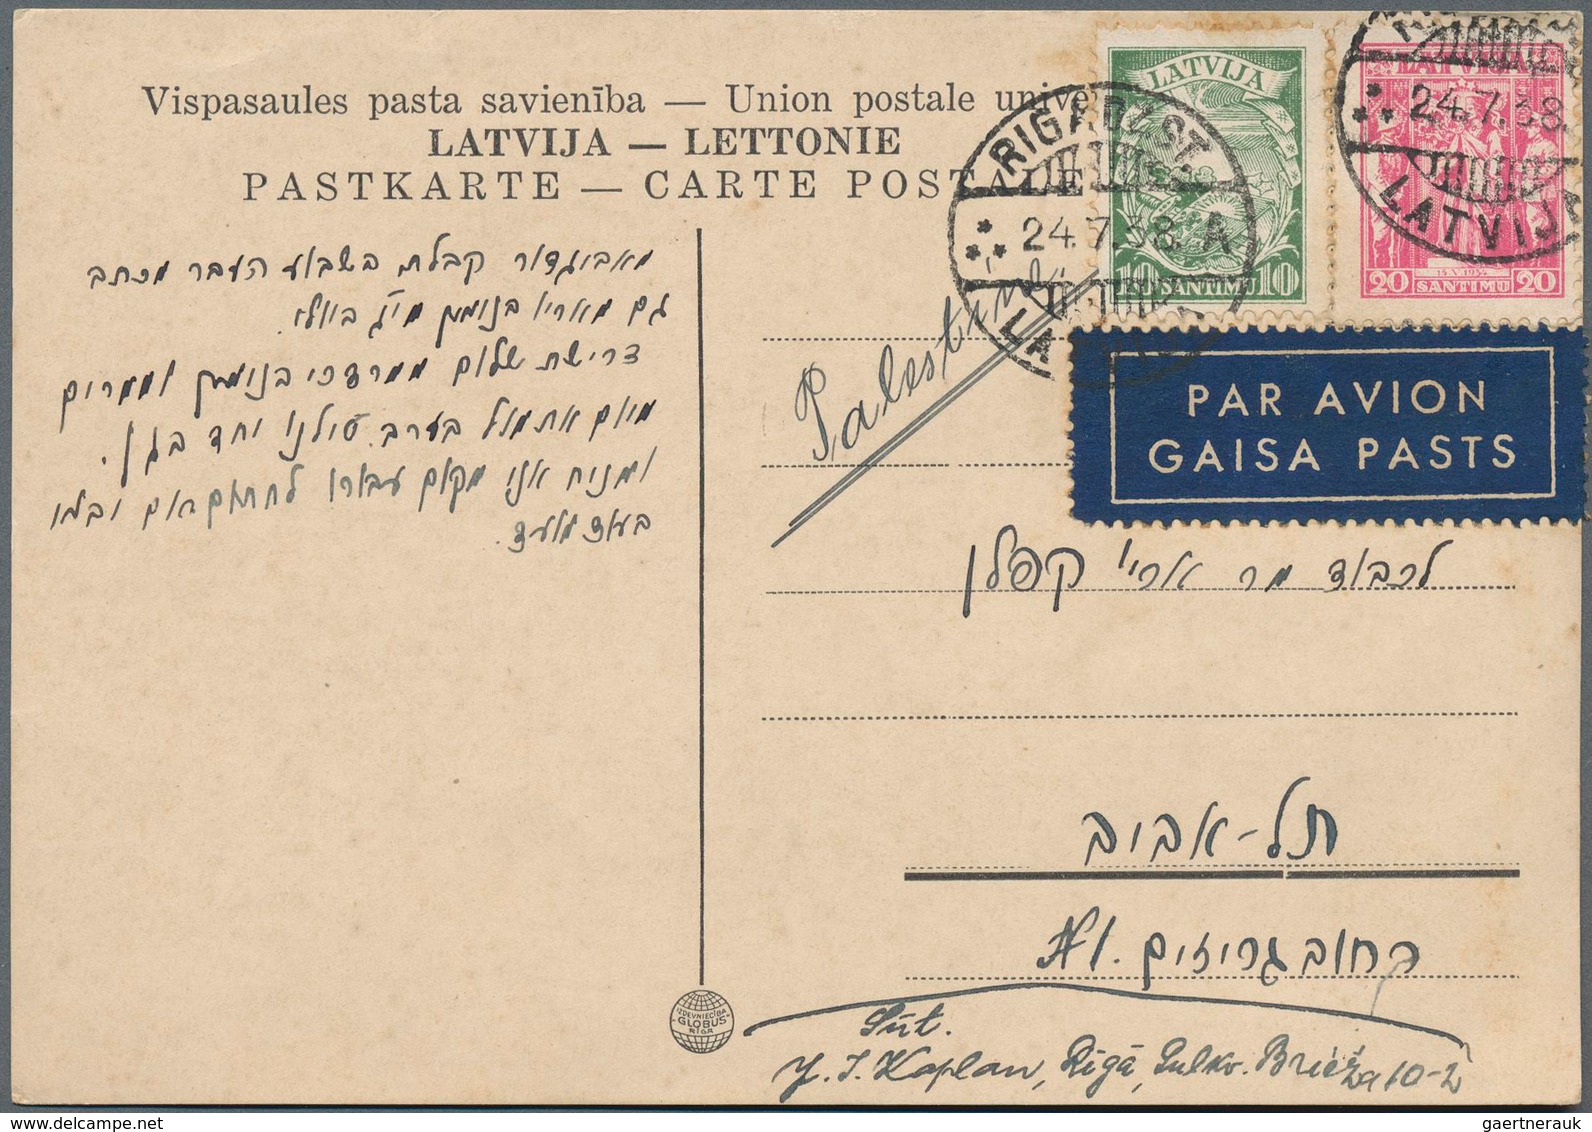 Thematik: Judaika / Judaism: 1938/1940, Three Cards All Writen In Hebrew Including Address Sent From - Ohne Zuordnung